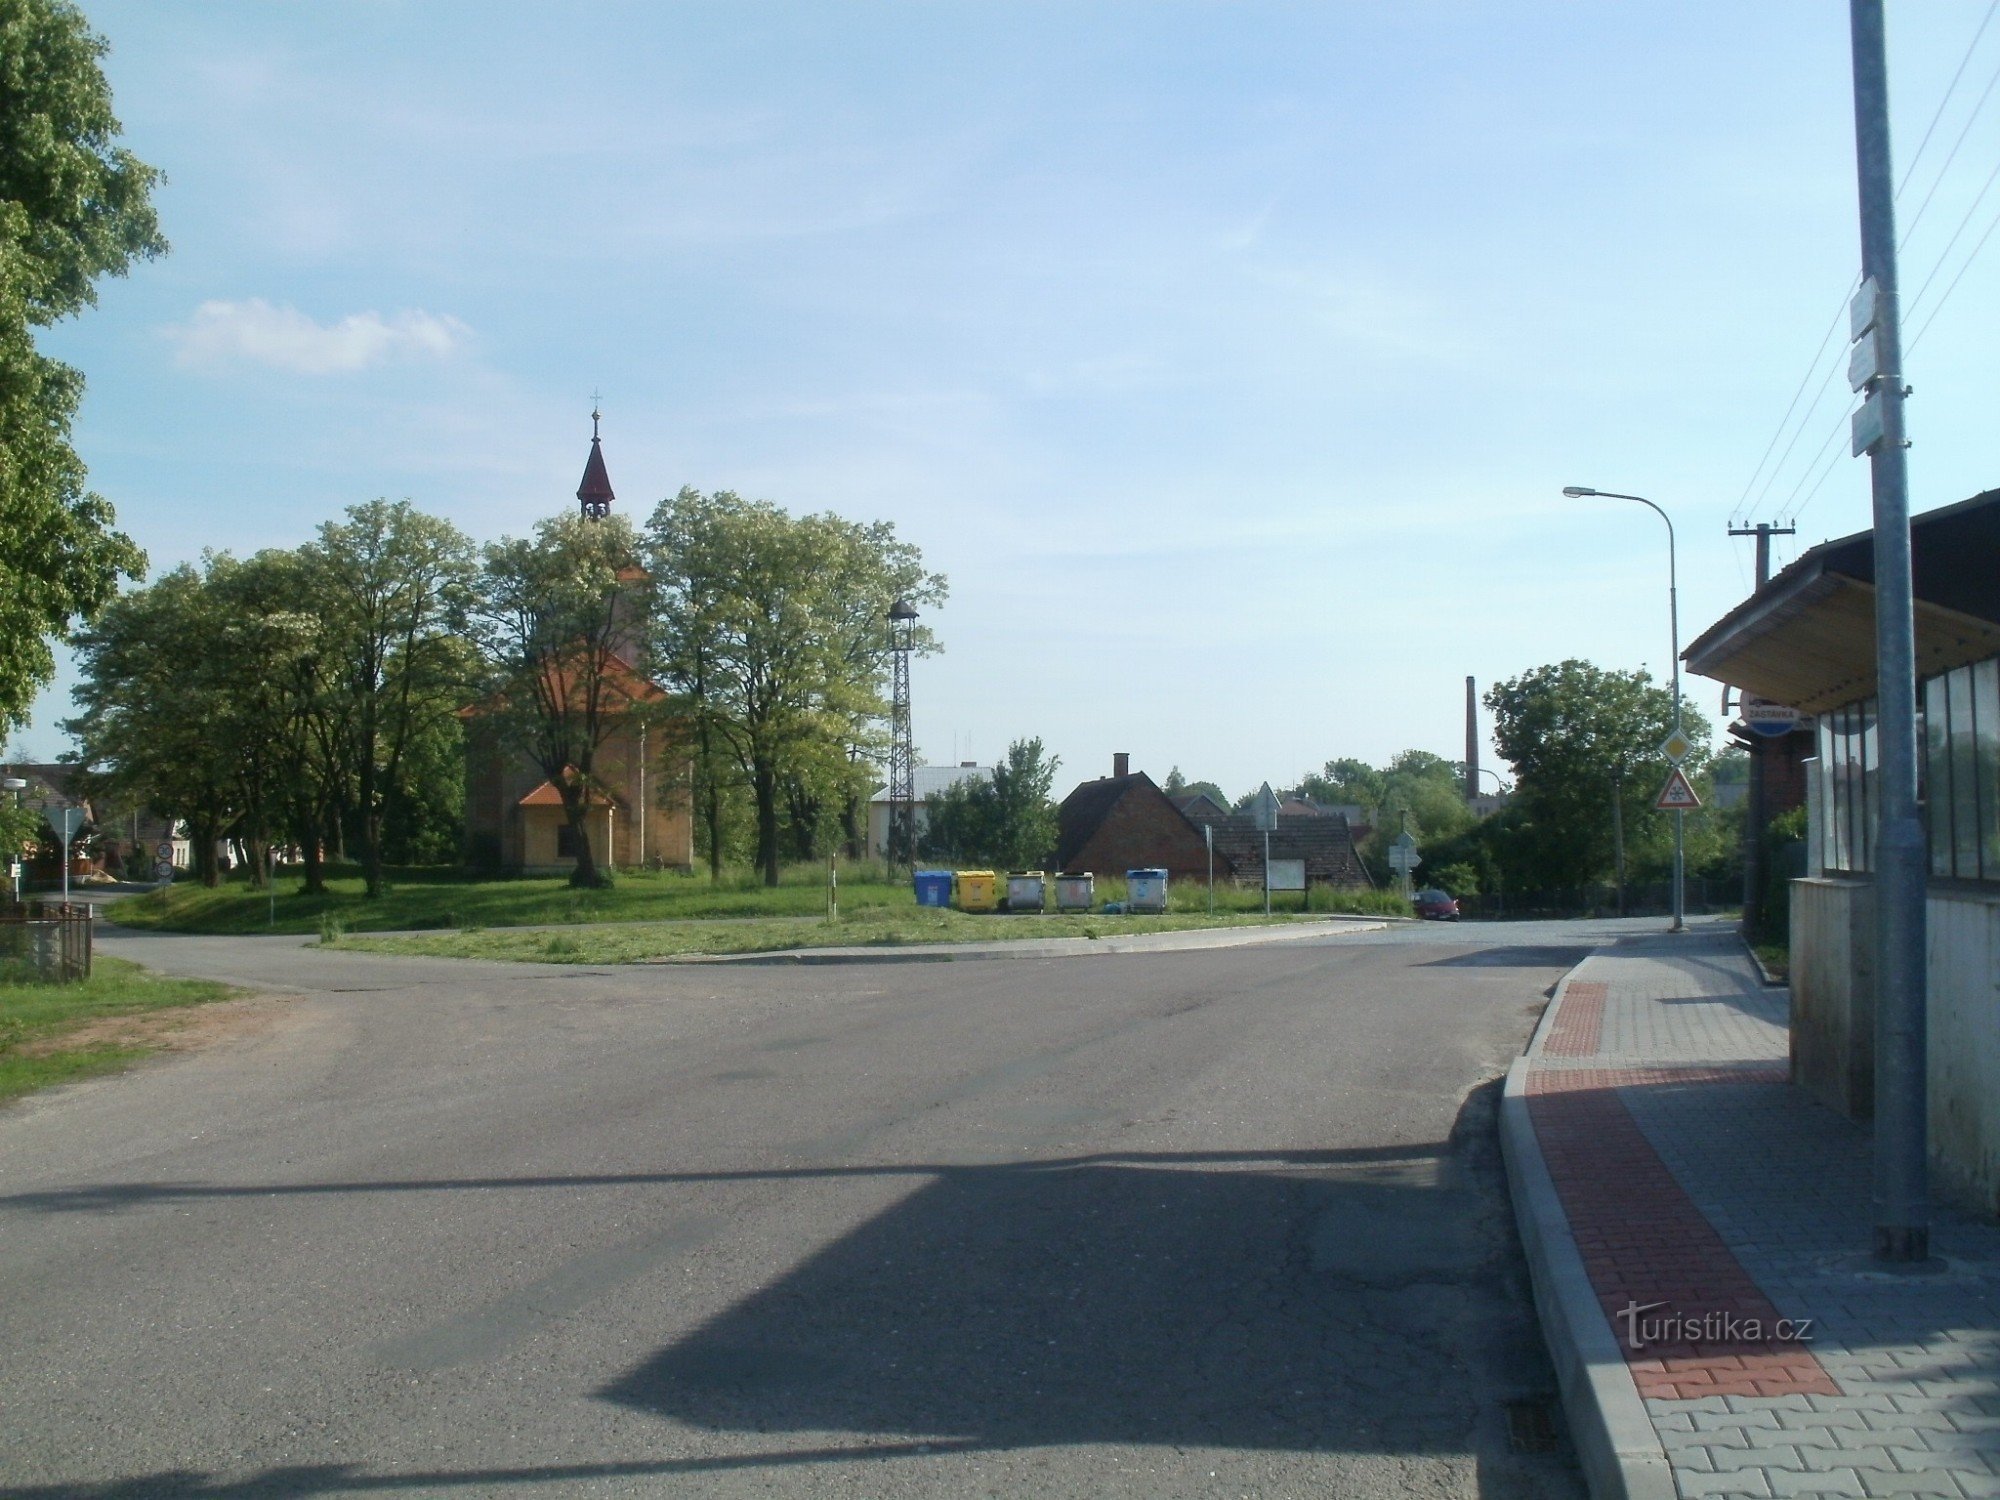 toeristisch kruispunt van Jeníkovice